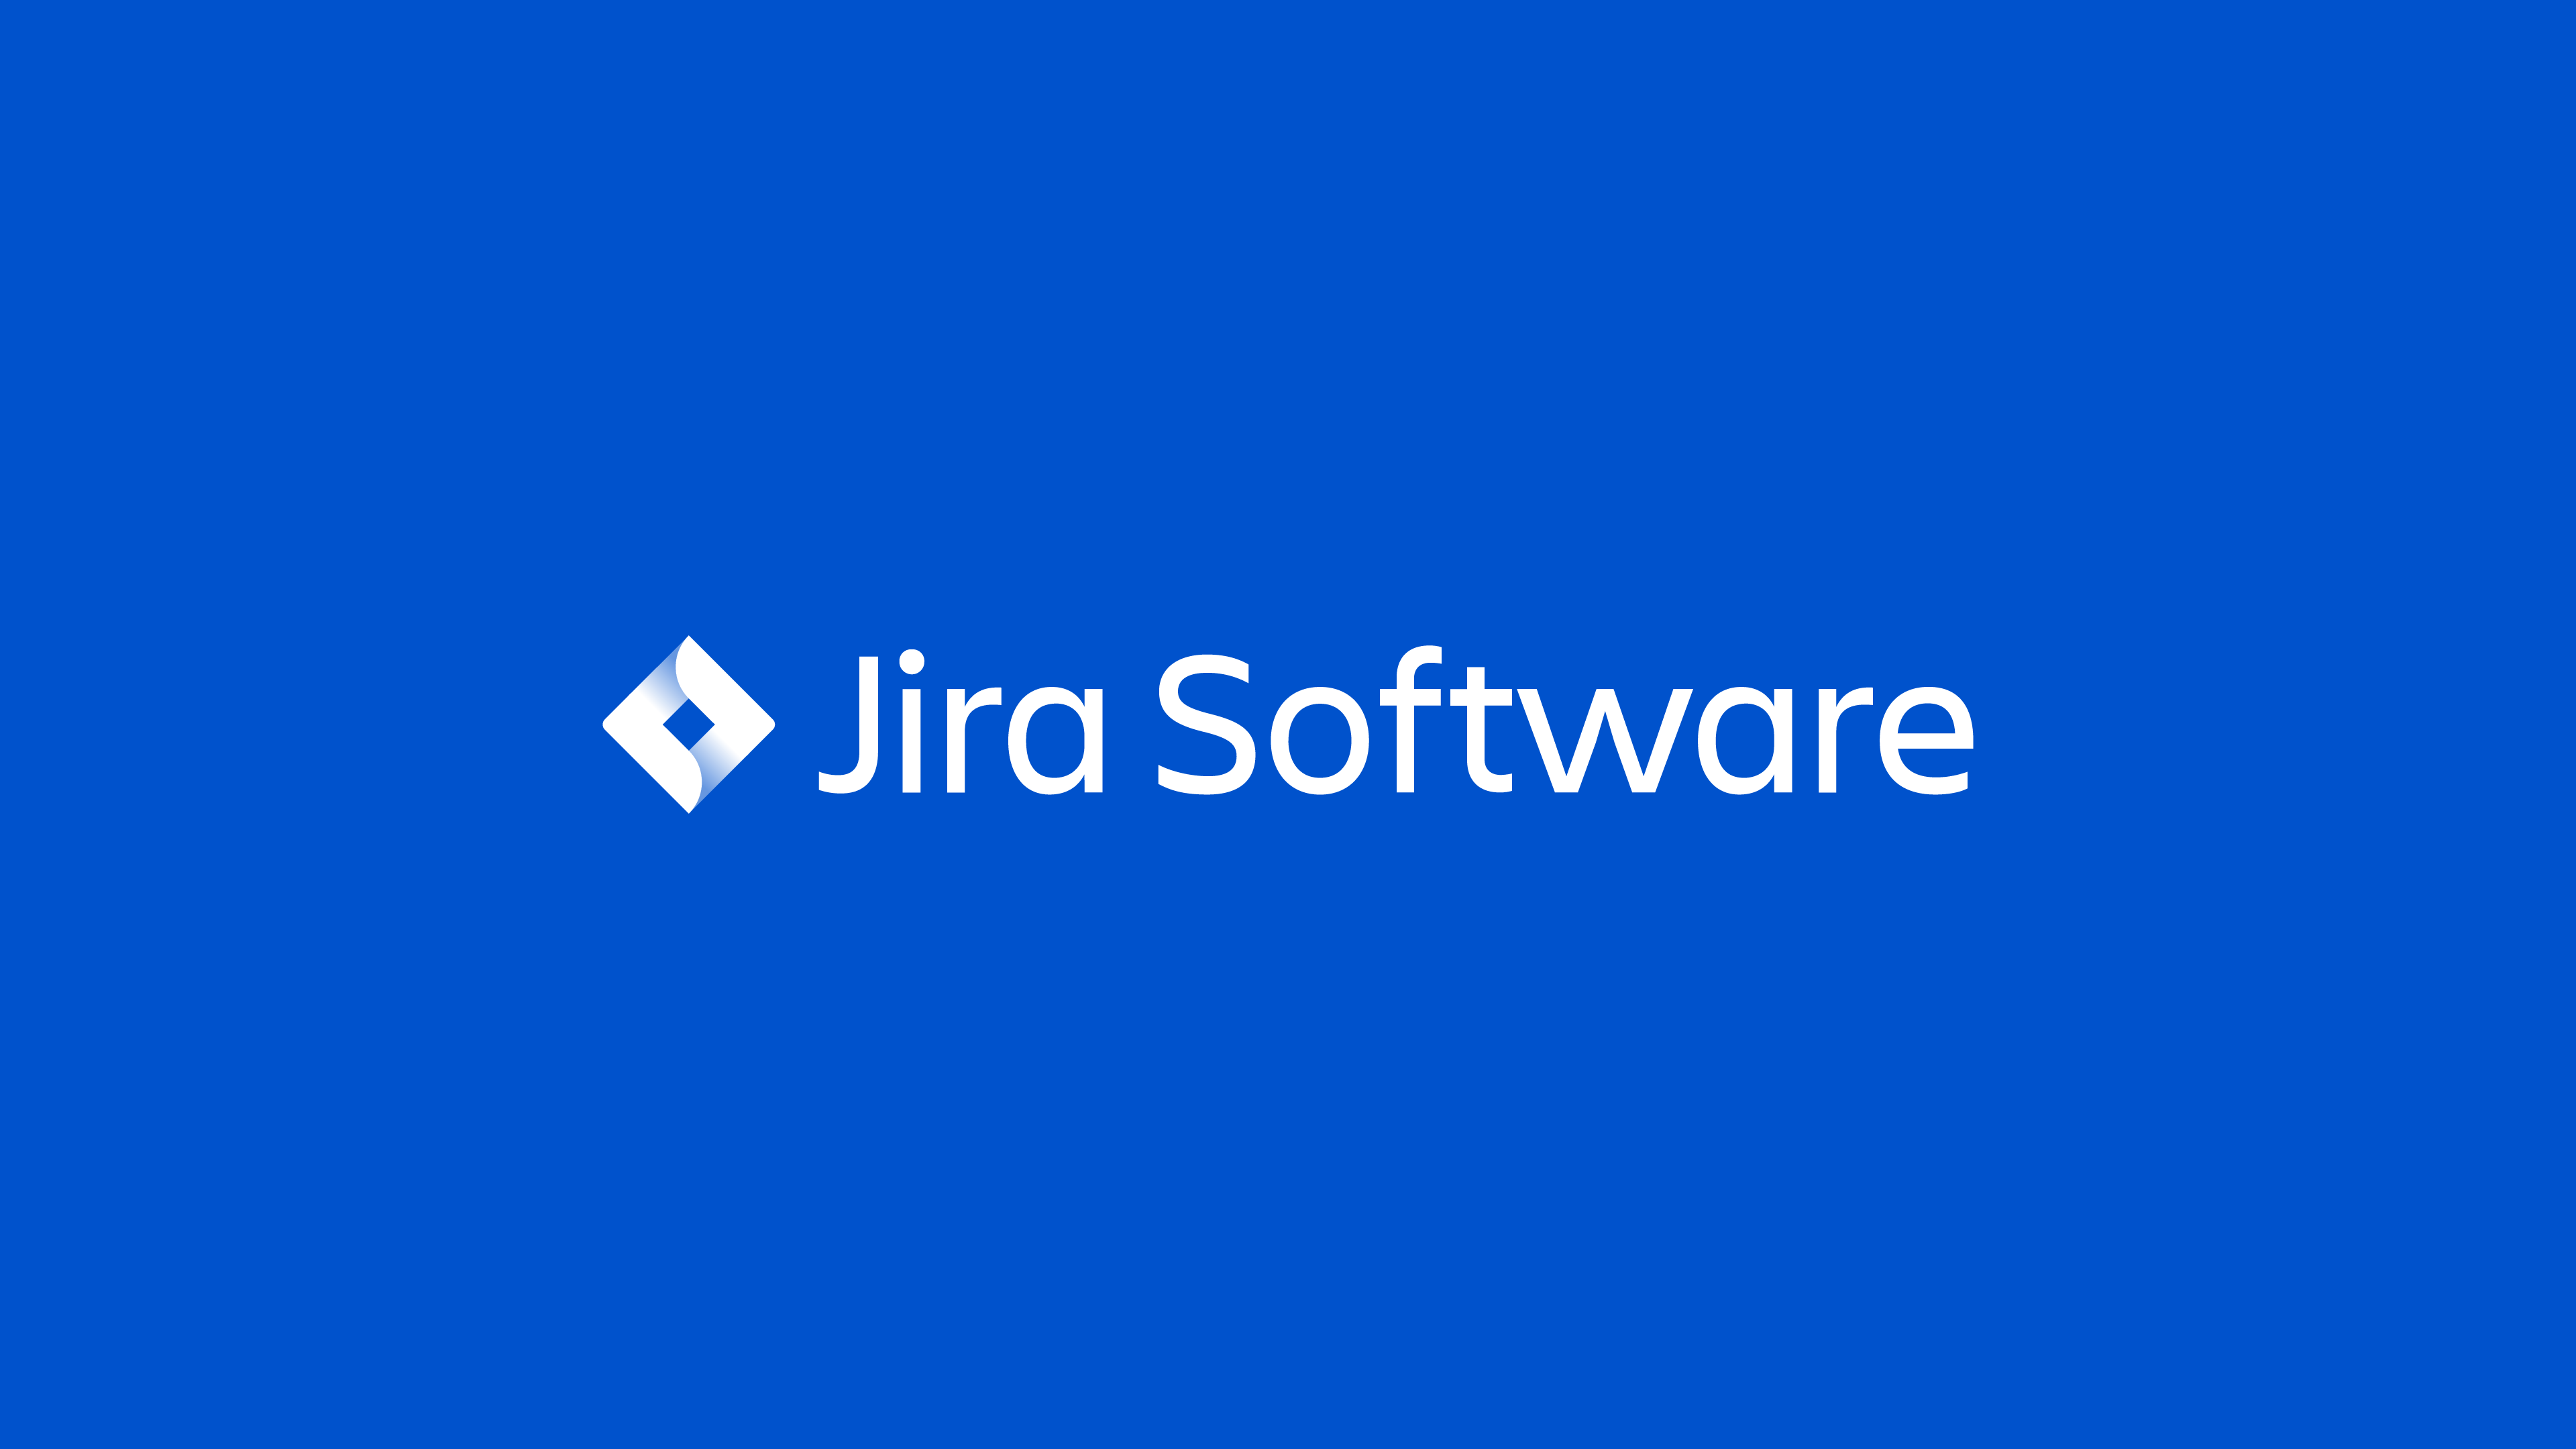 jira white on blue logo